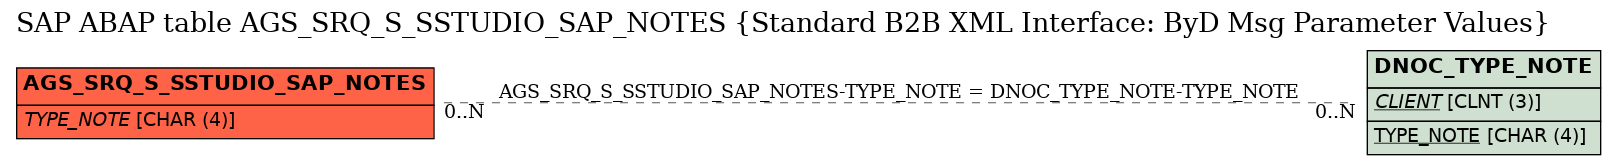 E-R Diagram for table AGS_SRQ_S_SSTUDIO_SAP_NOTES (Standard B2B XML Interface: ByD Msg Parameter Values)